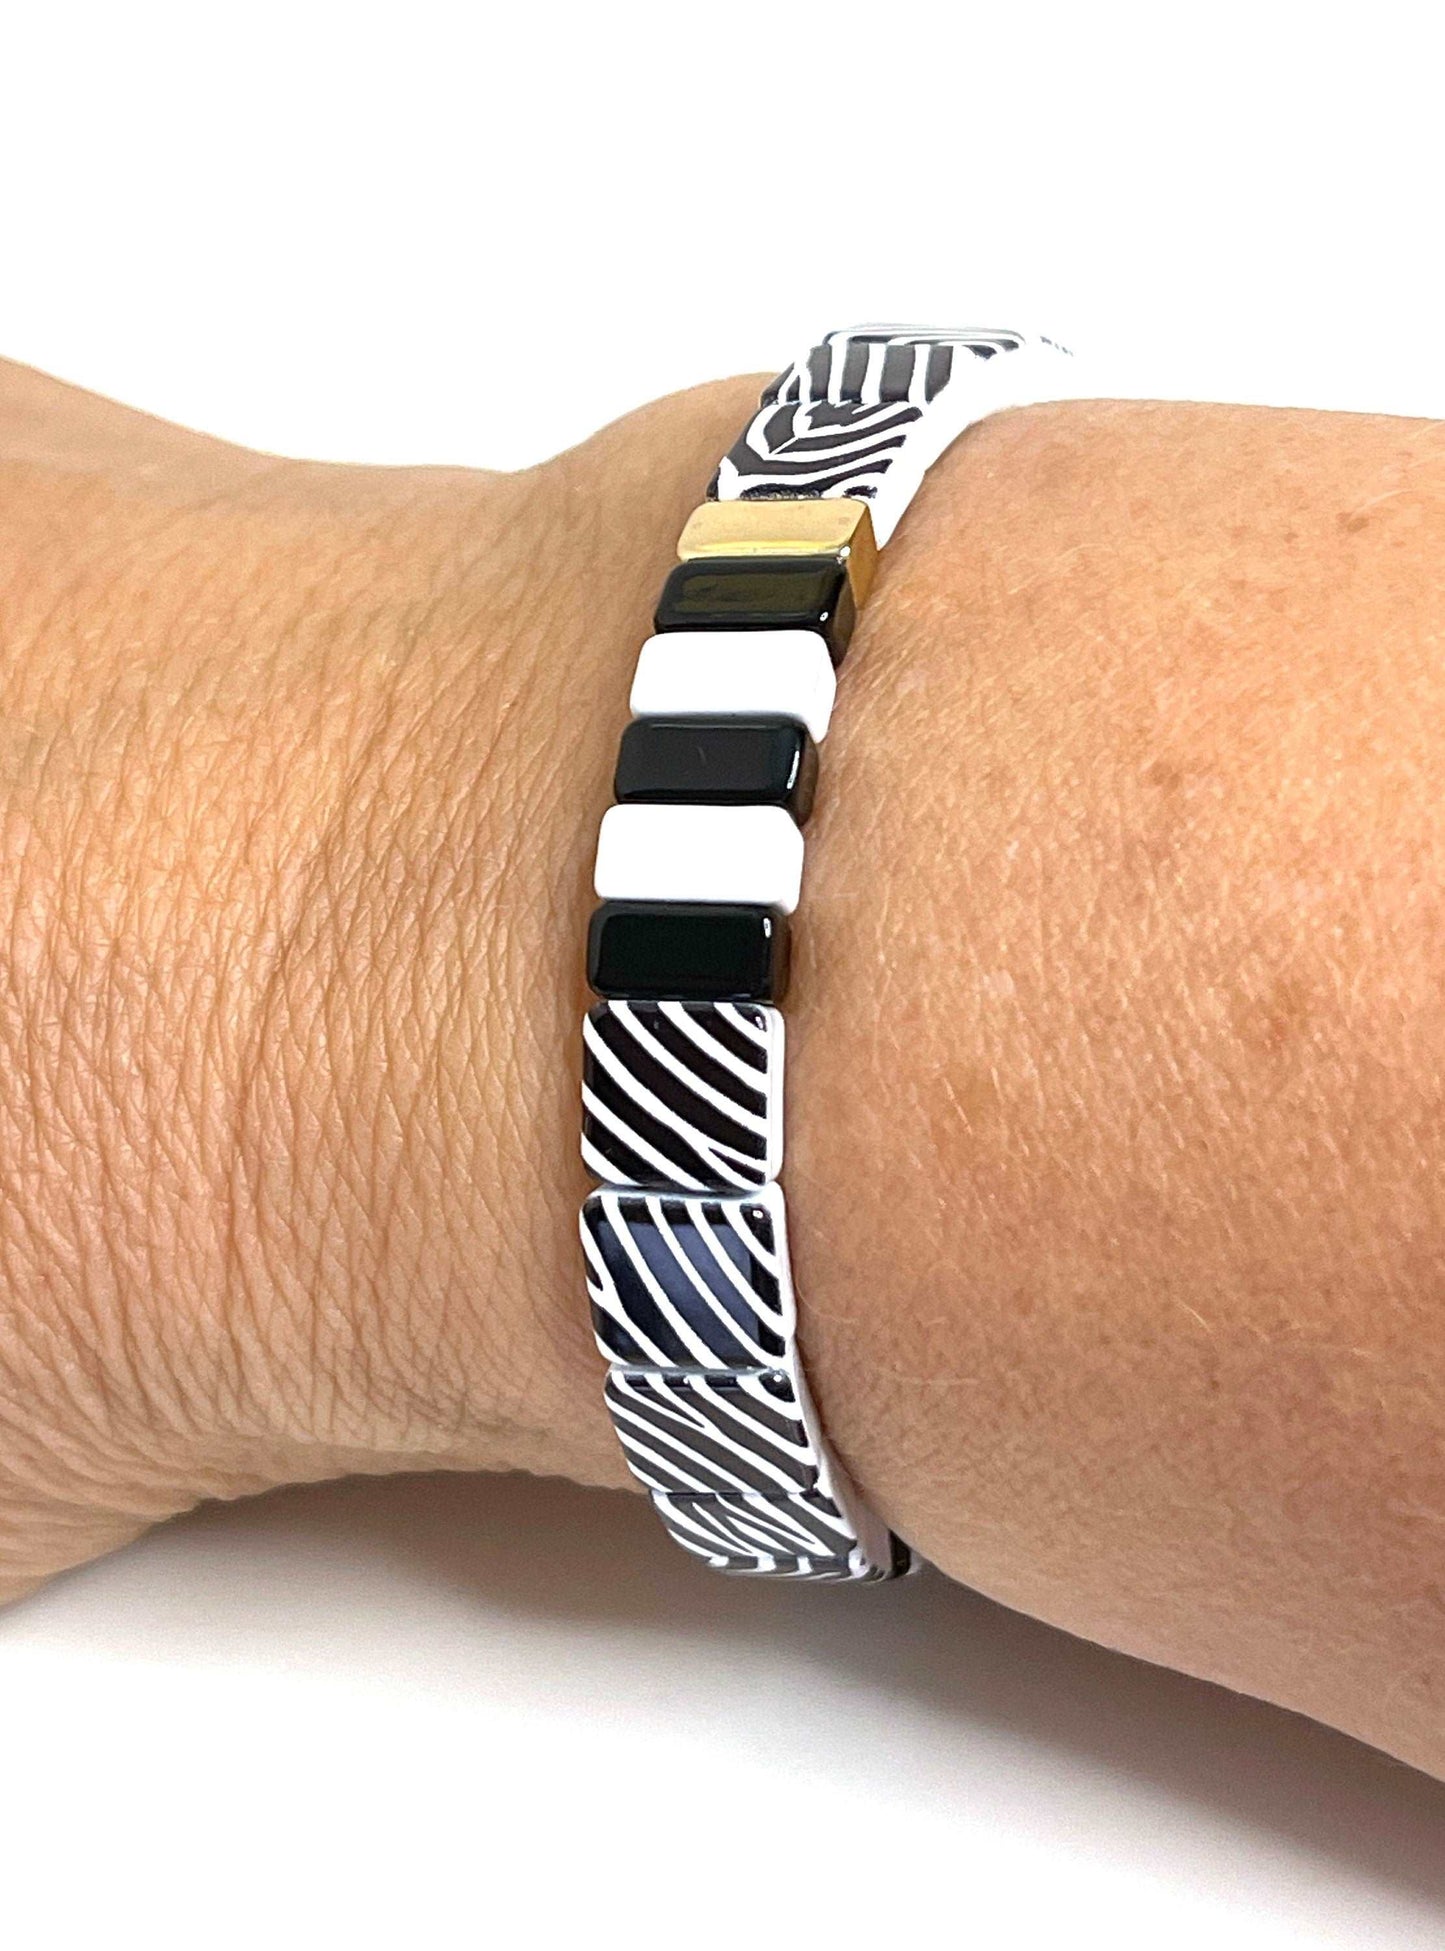 Tila Beaded Bracelet | Black and White Animal Print | Japanese Bead Stretch Bracelet